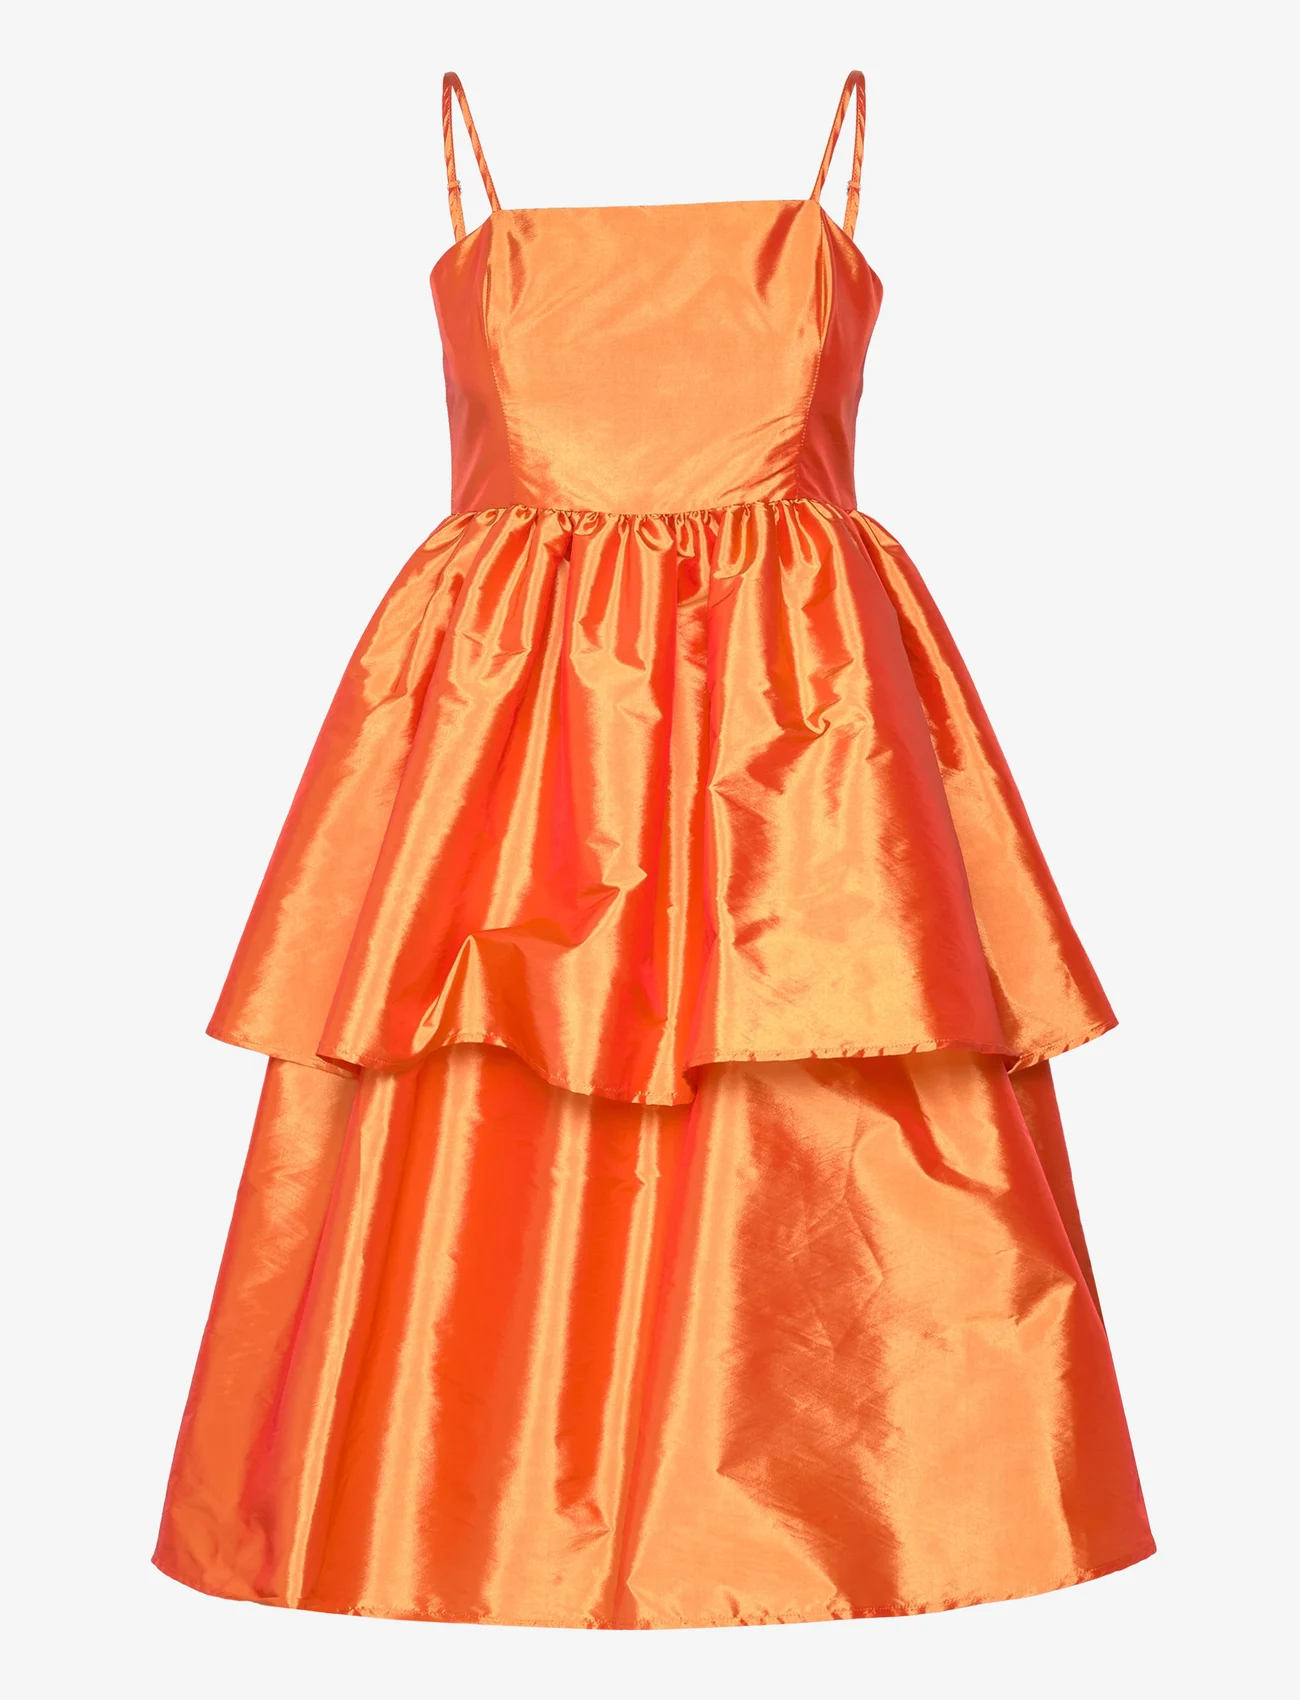 bzr - Tafetta Dream dress - festmode zu outlet-preisen - orange flame - 0